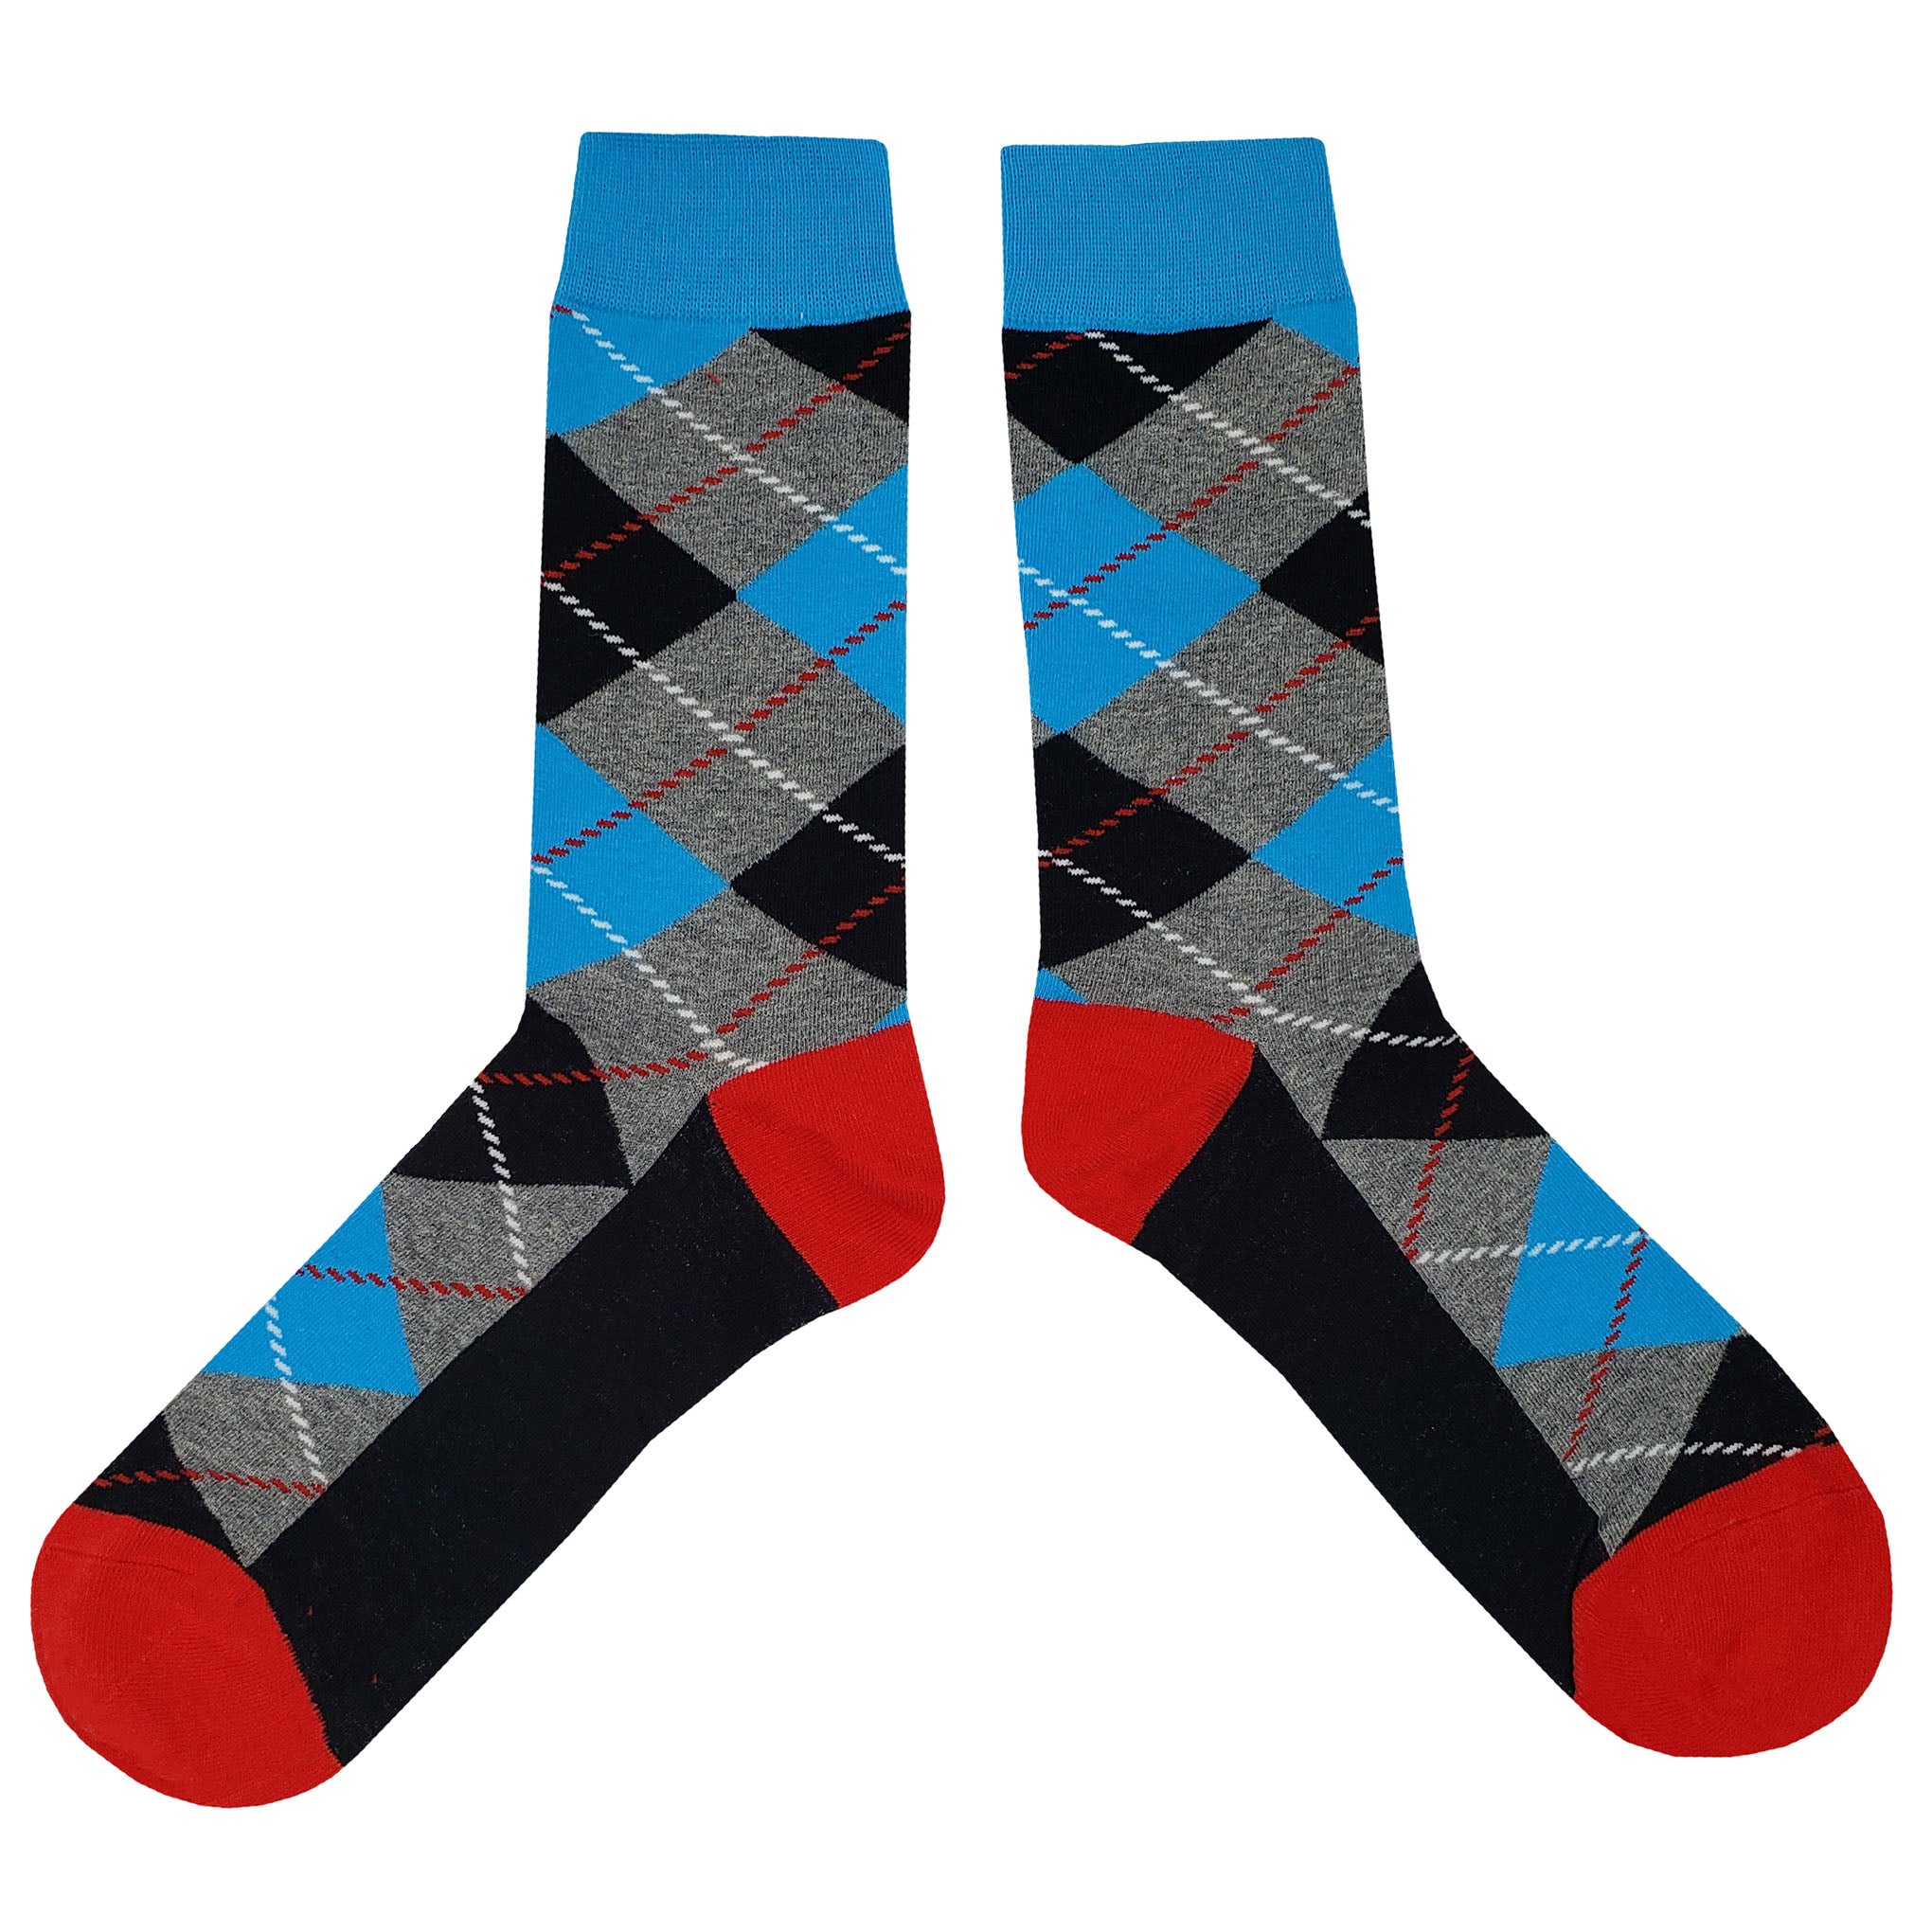 Blue Relax Argyle Socks - Fun and Crazy Socks at Sockfly.com